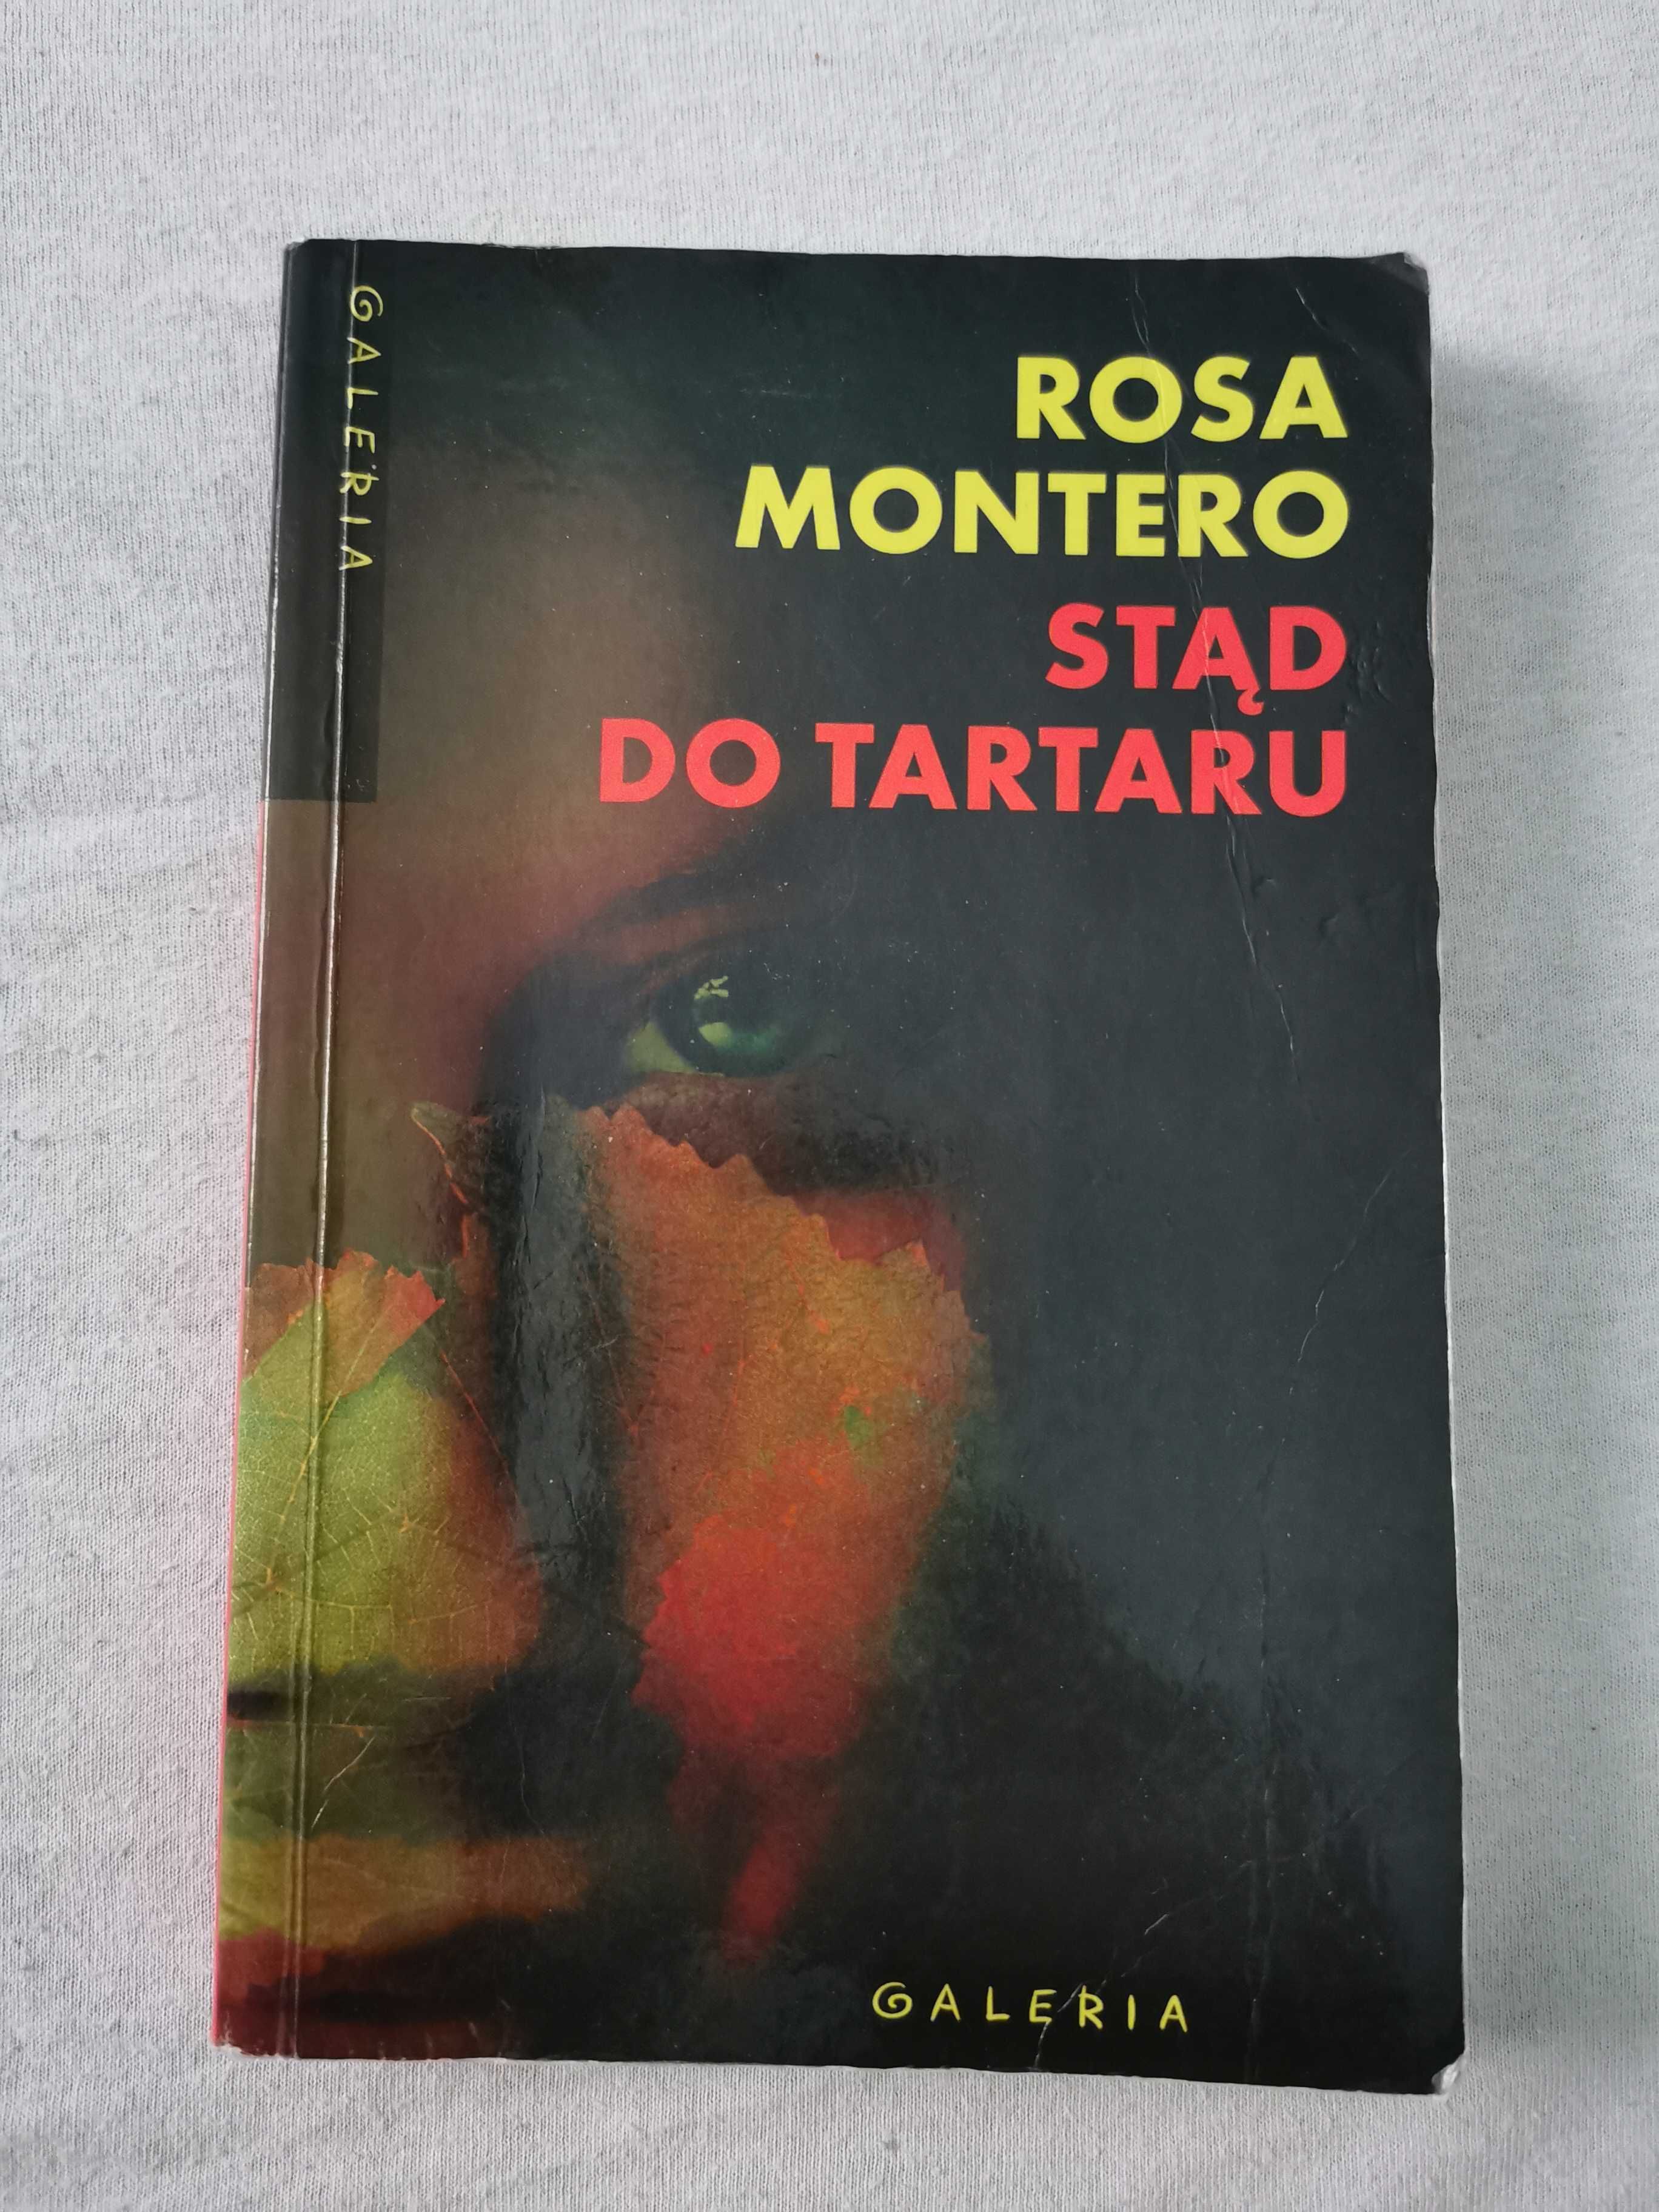 Rosa Montero "Stąd do tartaru"